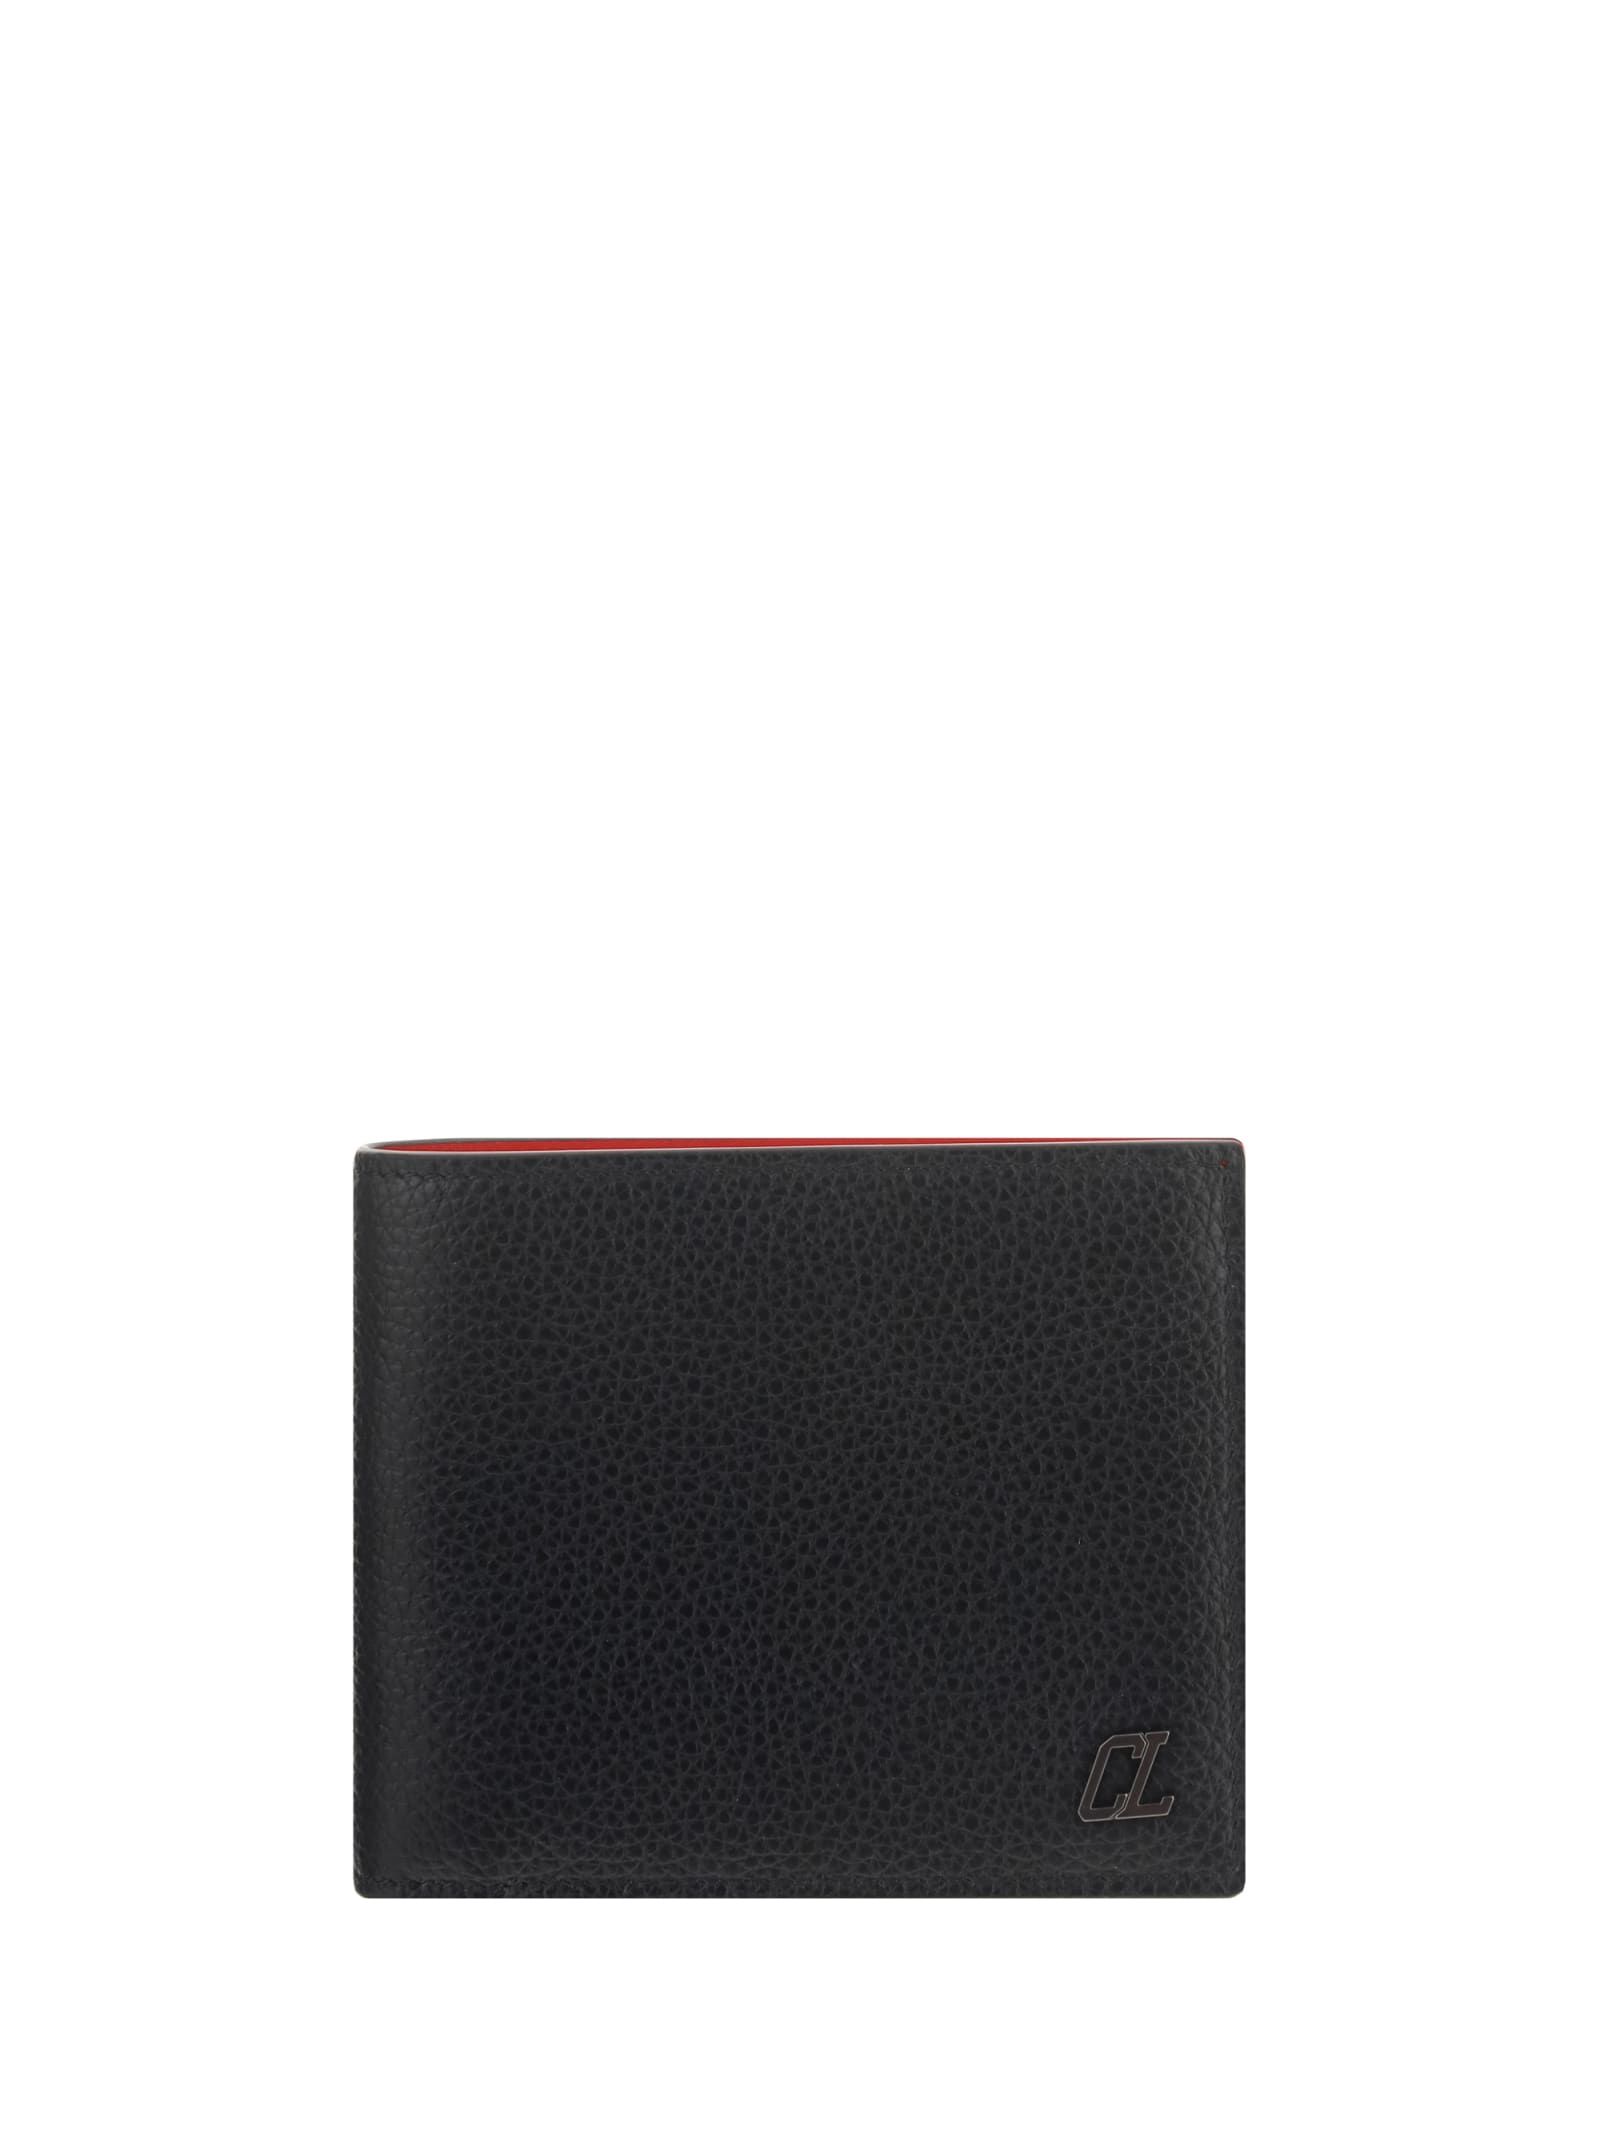 Christian Louboutin Coolcard Wallet In Black/gun Metal